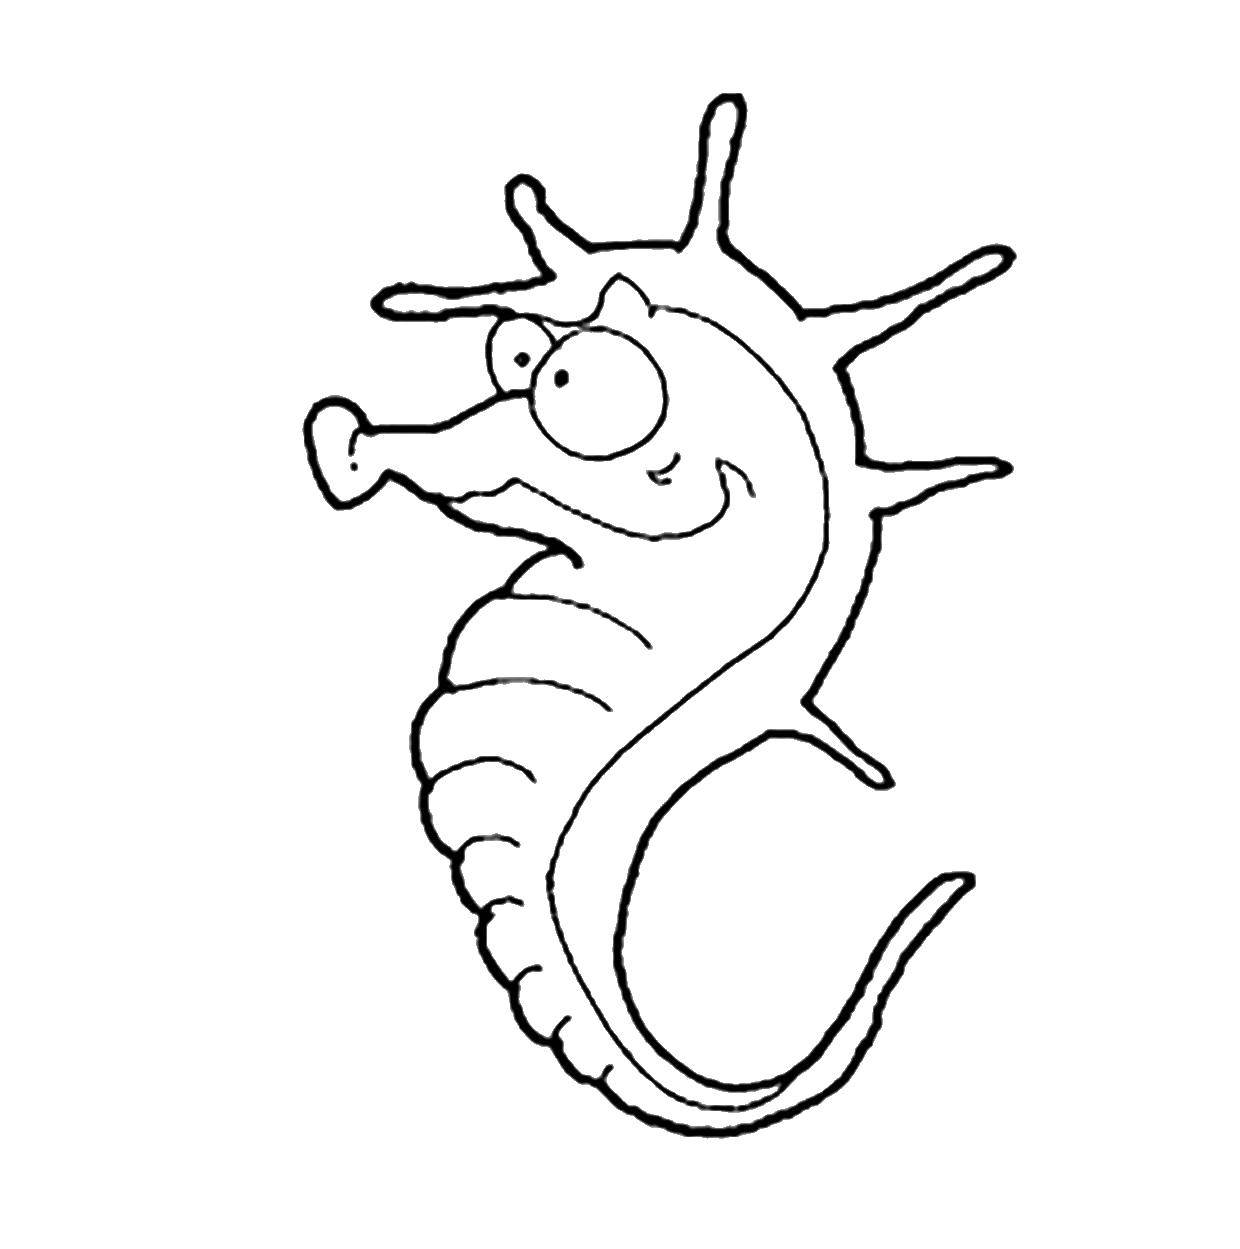 Coloring Seahorse. Category fish. Tags:  seahorse.